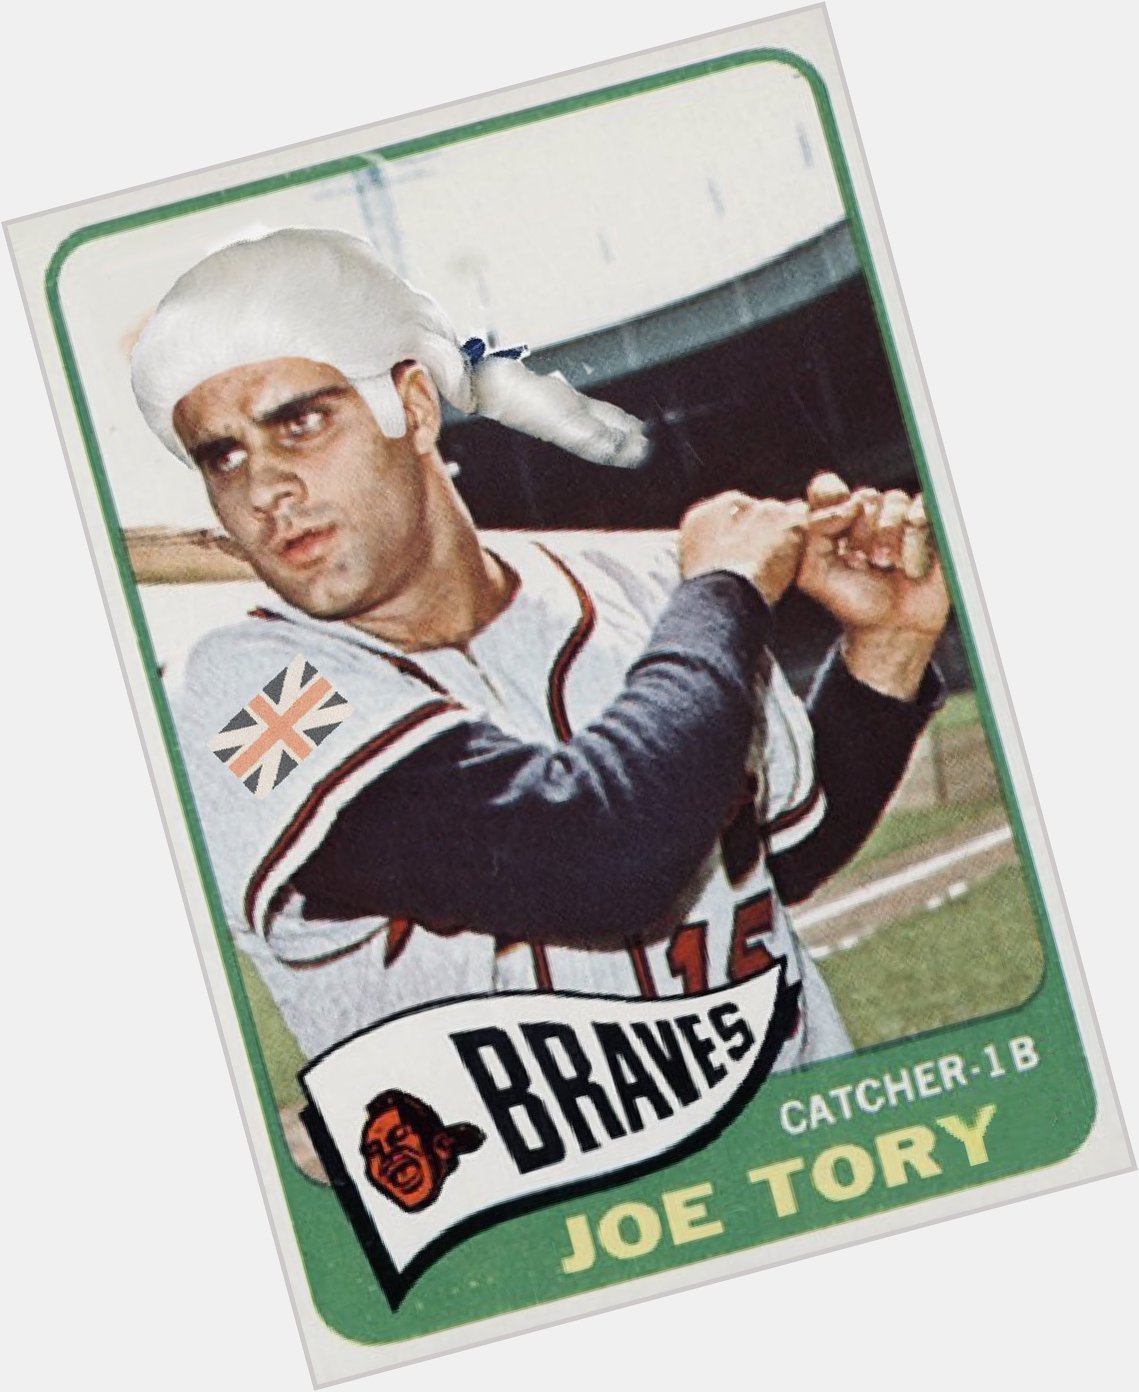 Happy 81st birthday Joe Torre! 